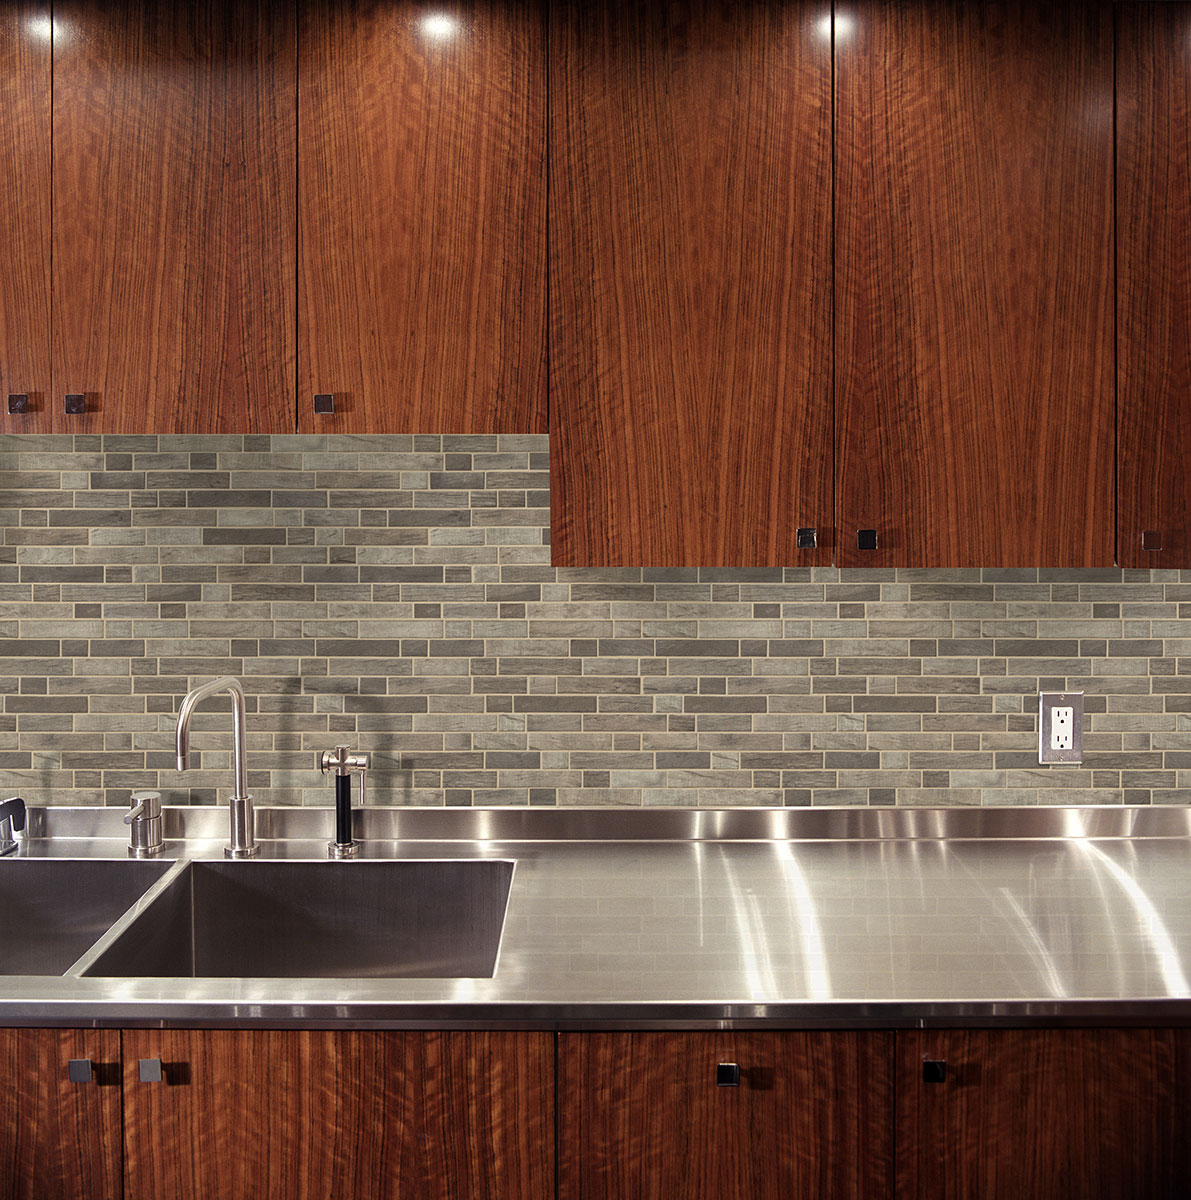 Driftwood Interlocking Glass Tile backsplash in kitchen